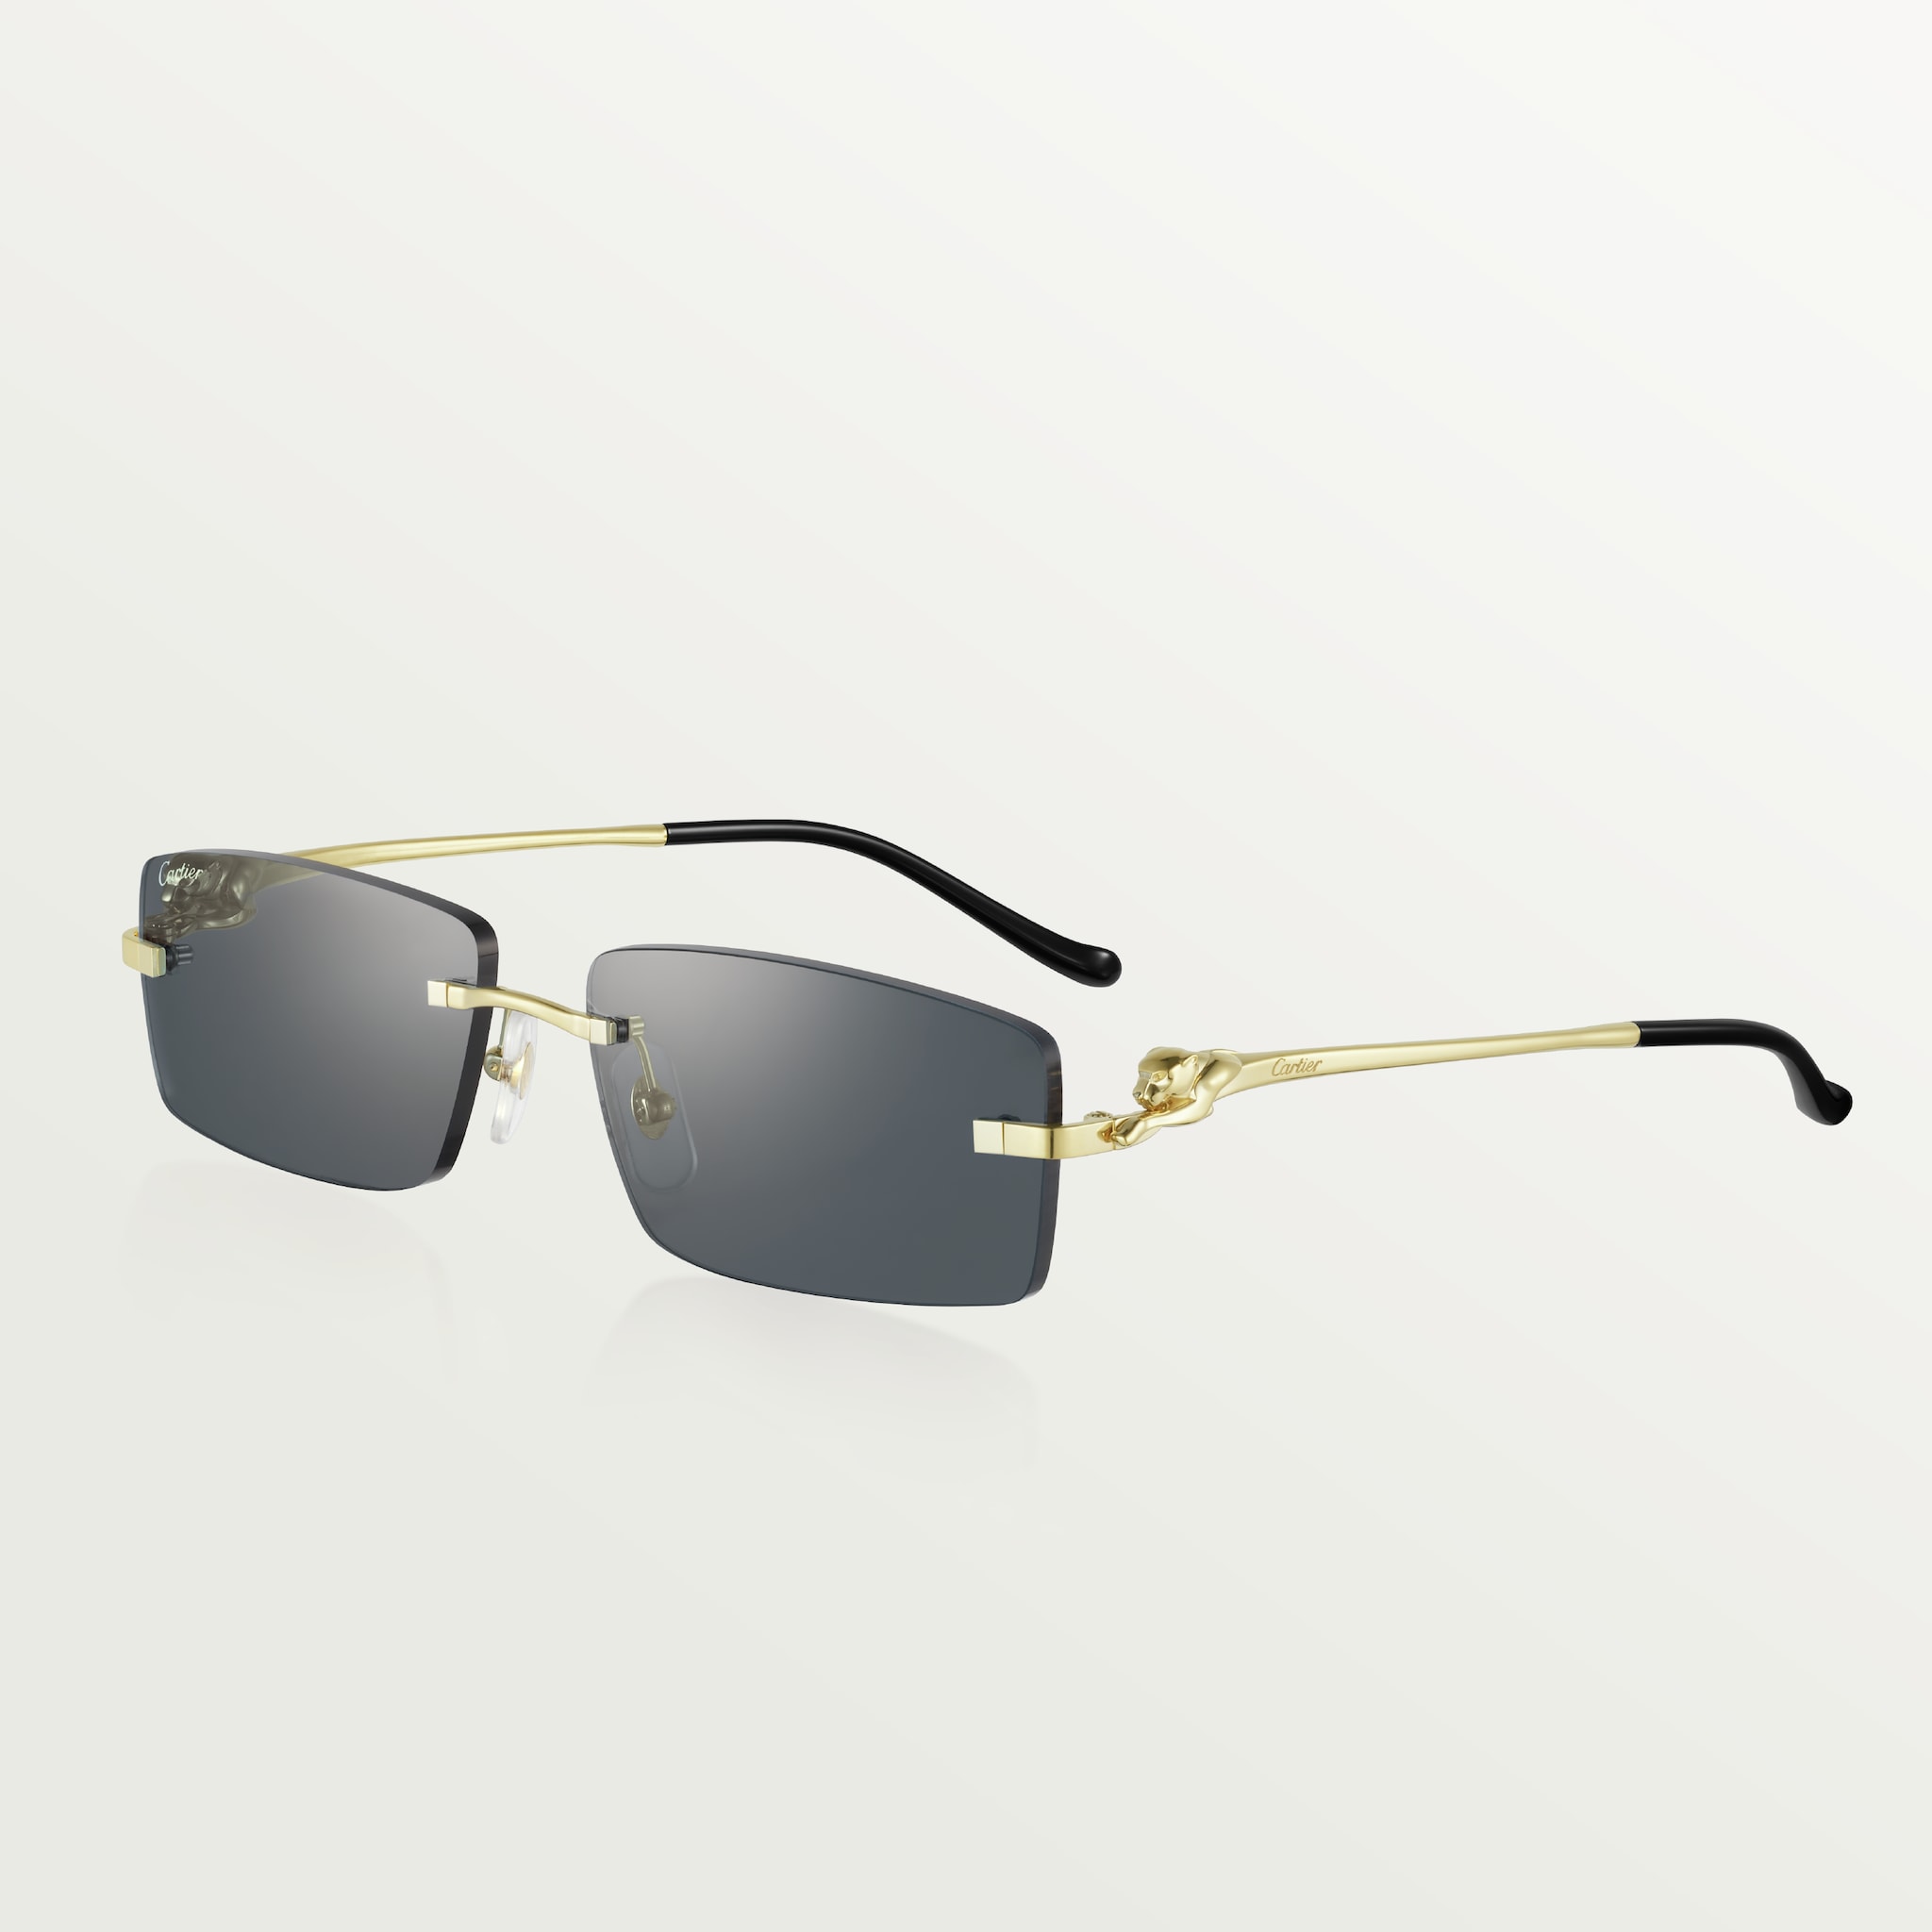 Panthère de Cartier sunglassesSmooth golden-finish metal, grey lenses